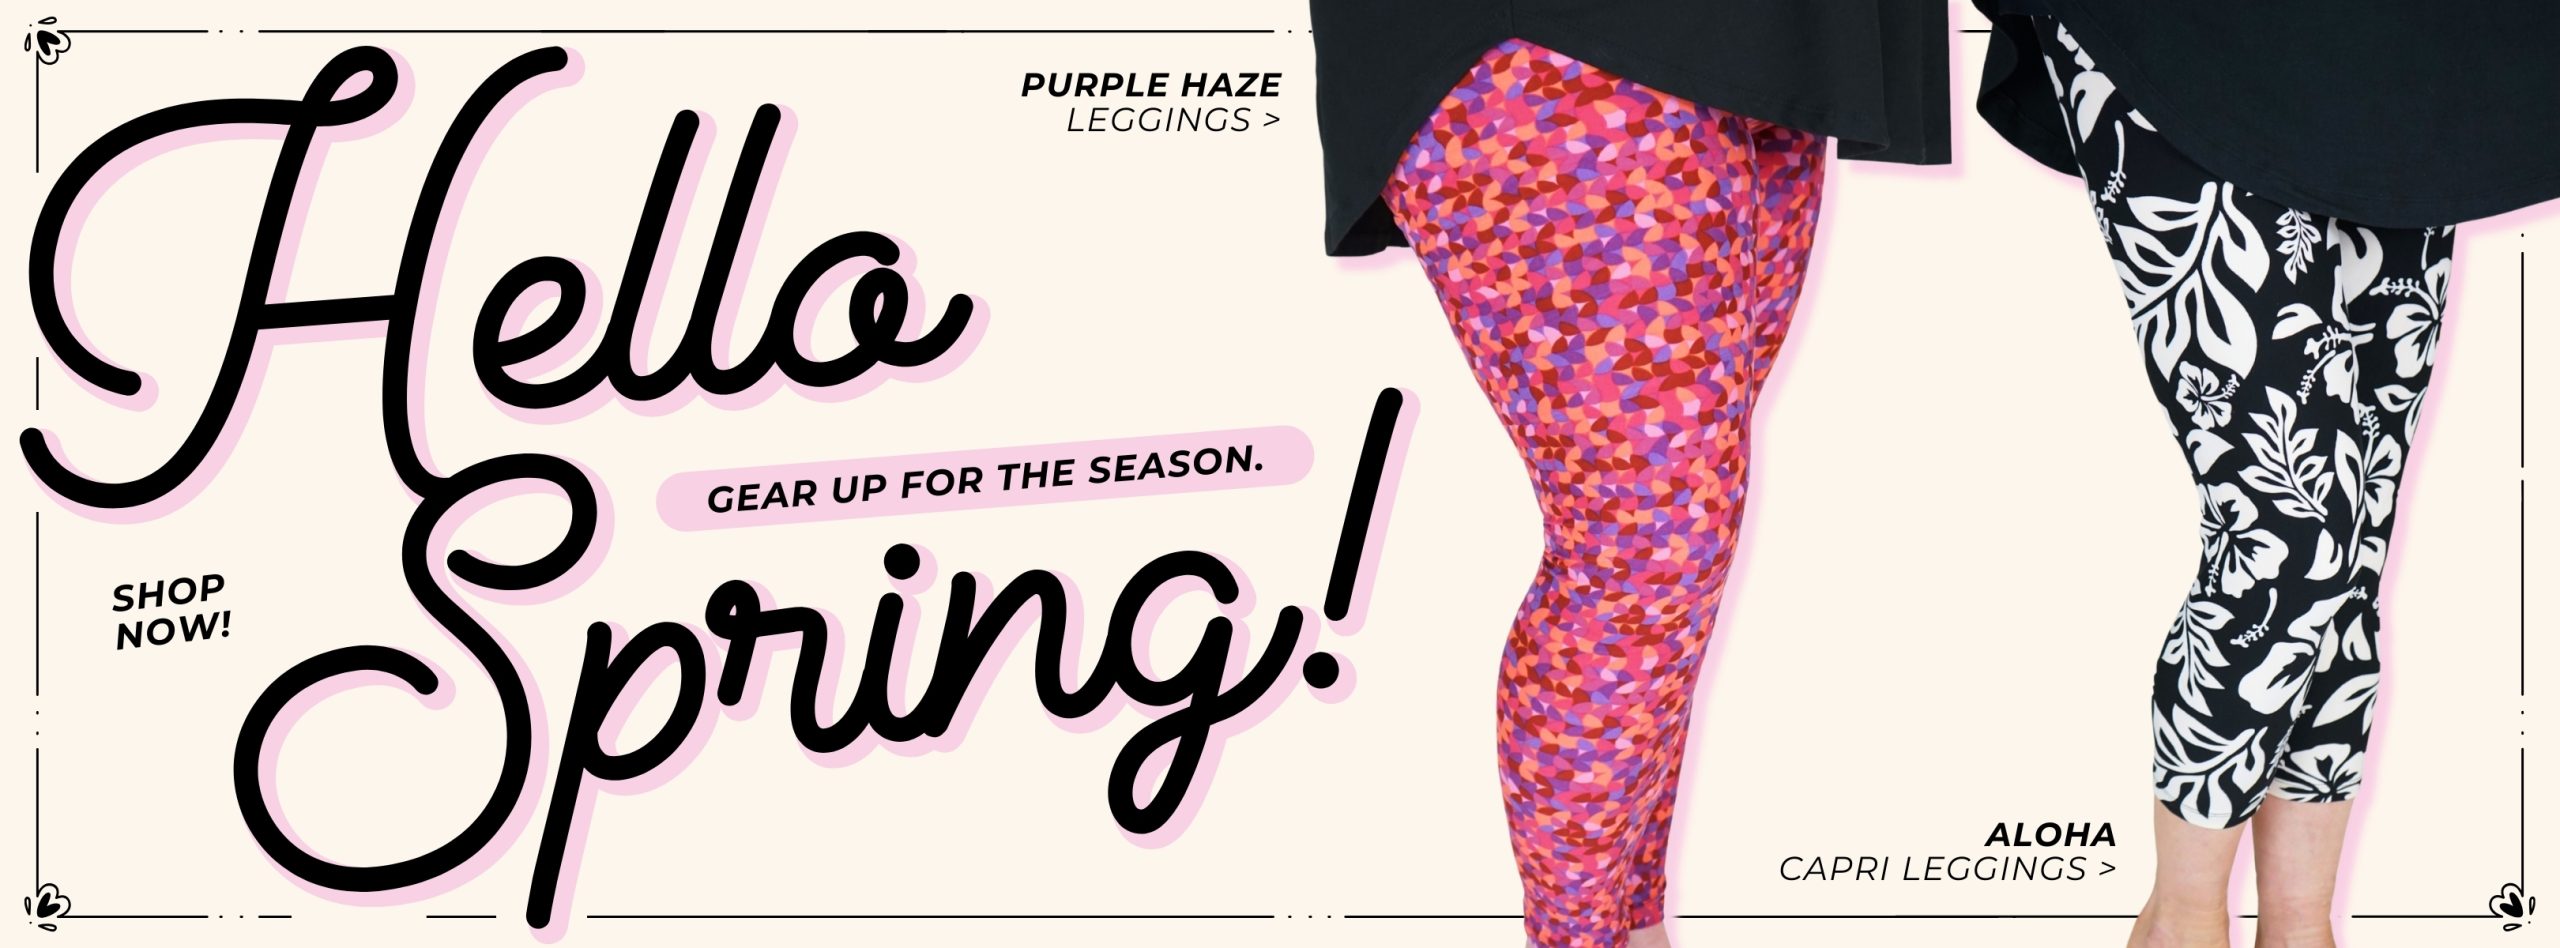 Hello Spring Banner showing our two new leggings: Purple Haze Leggings and Aloha Capri Leggings